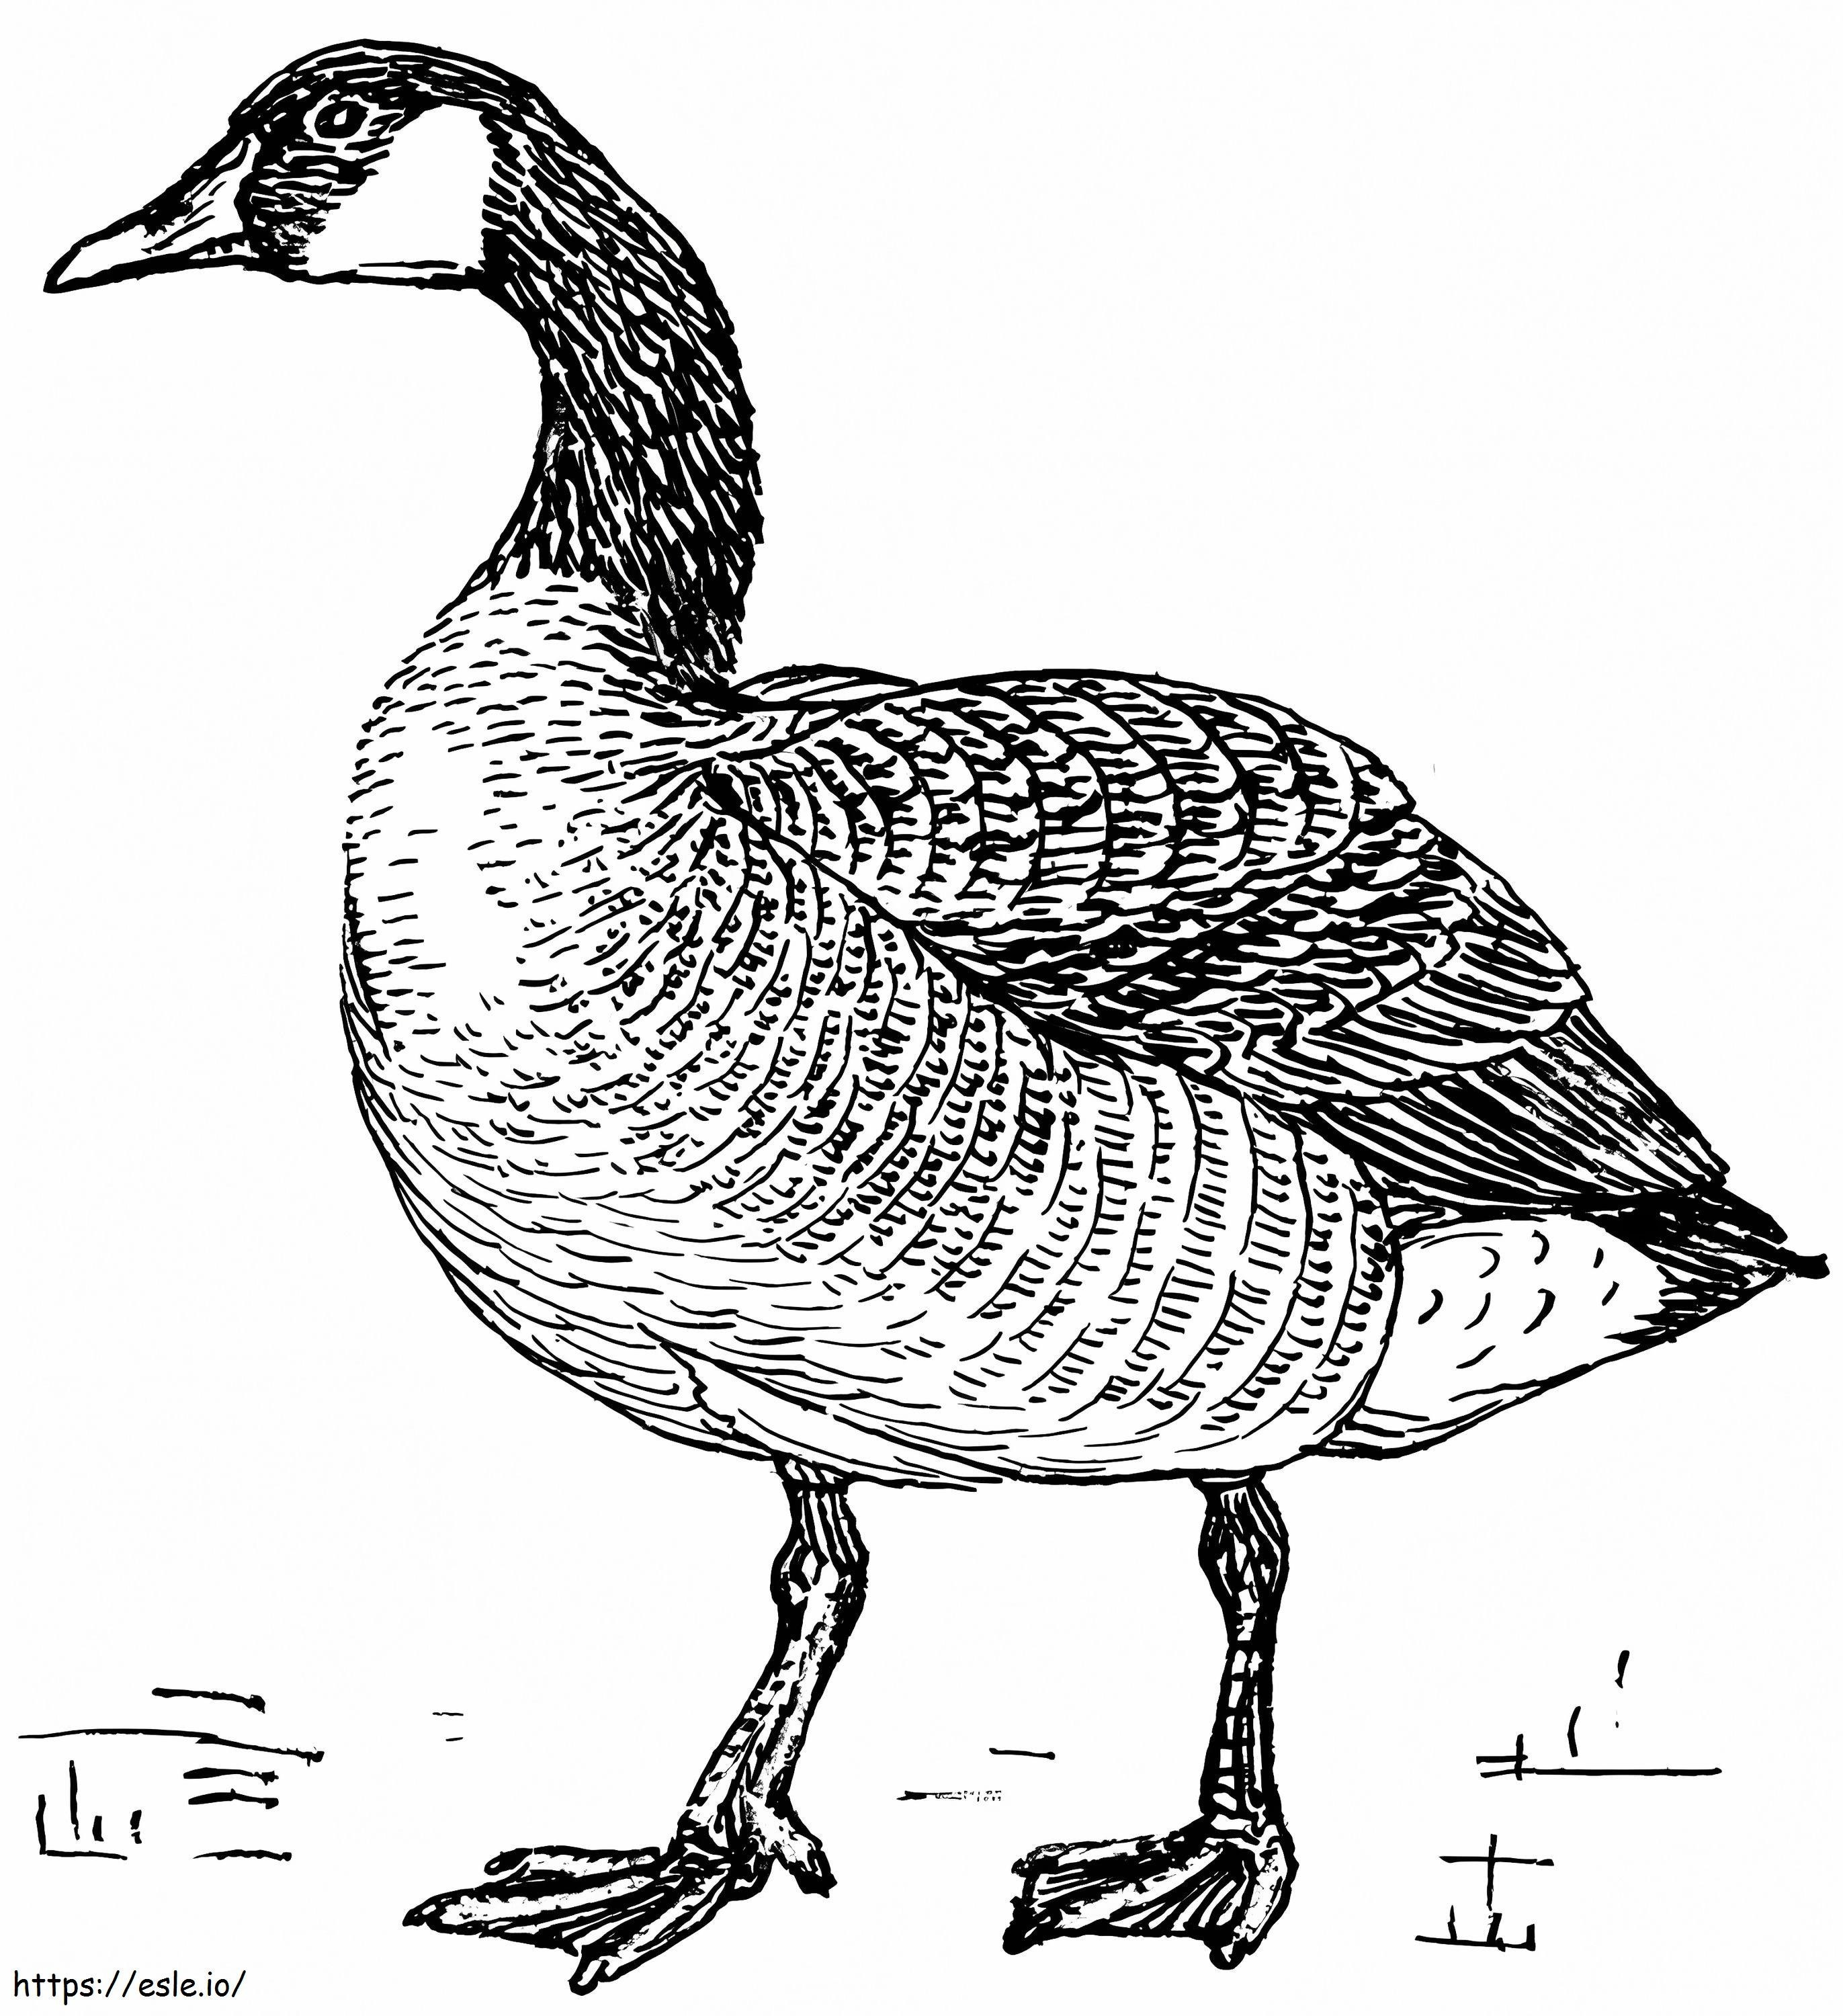 Normal Canada Goose coloring page